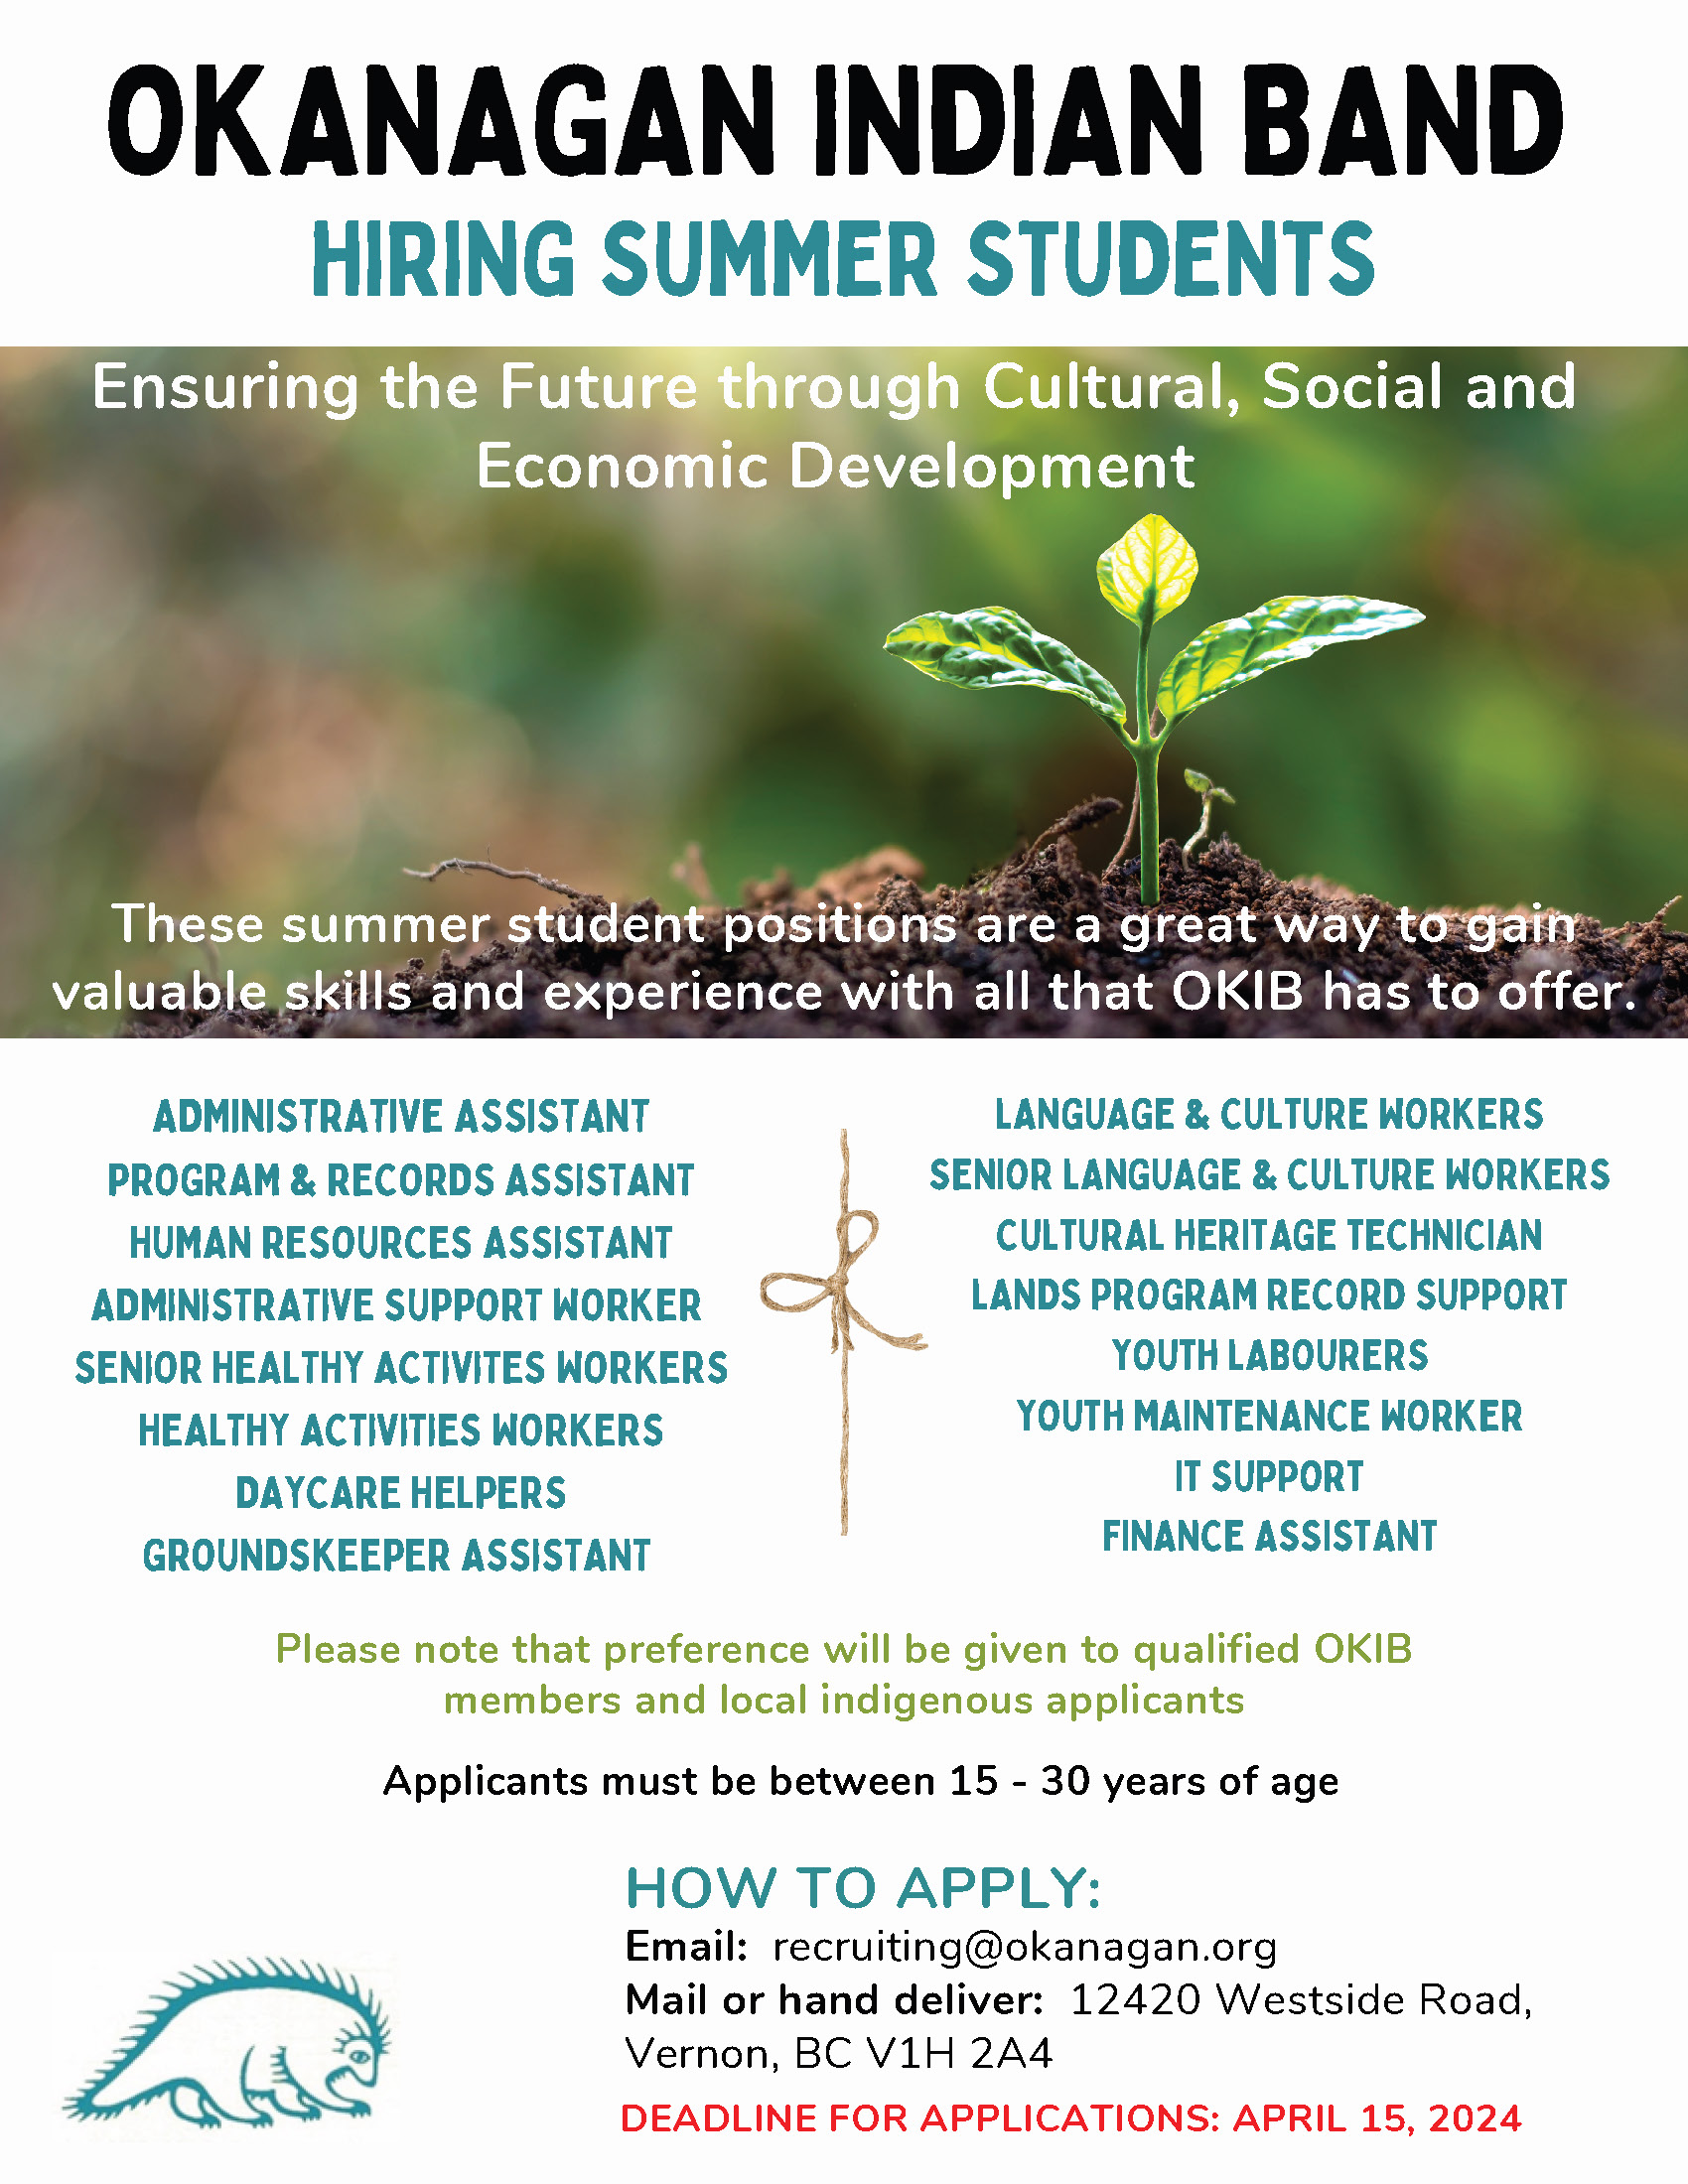 OKIB Summer student positions